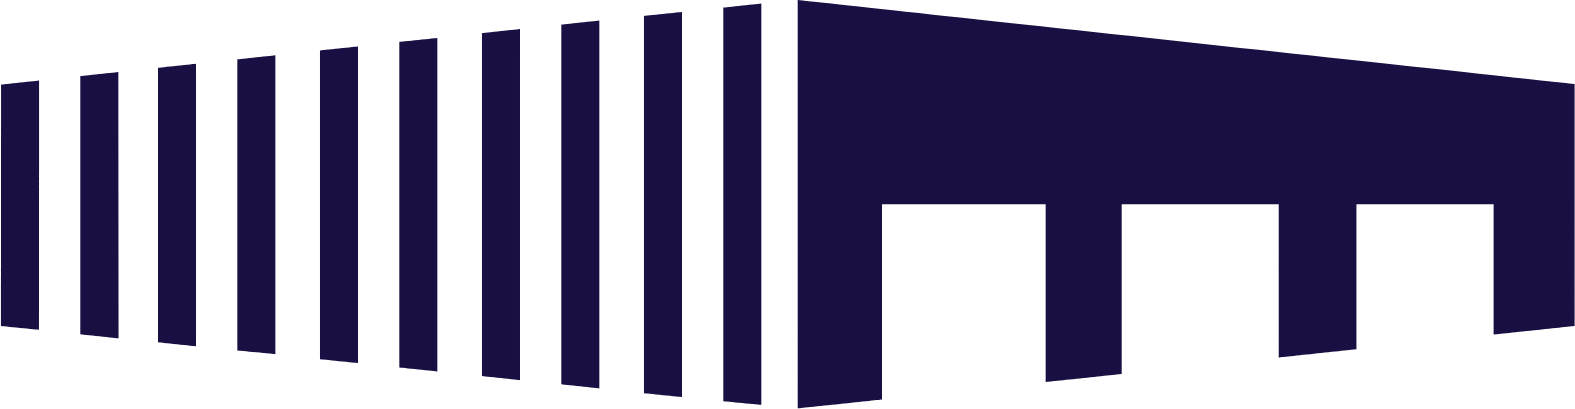 Montea Comm logo (transparent PNG)